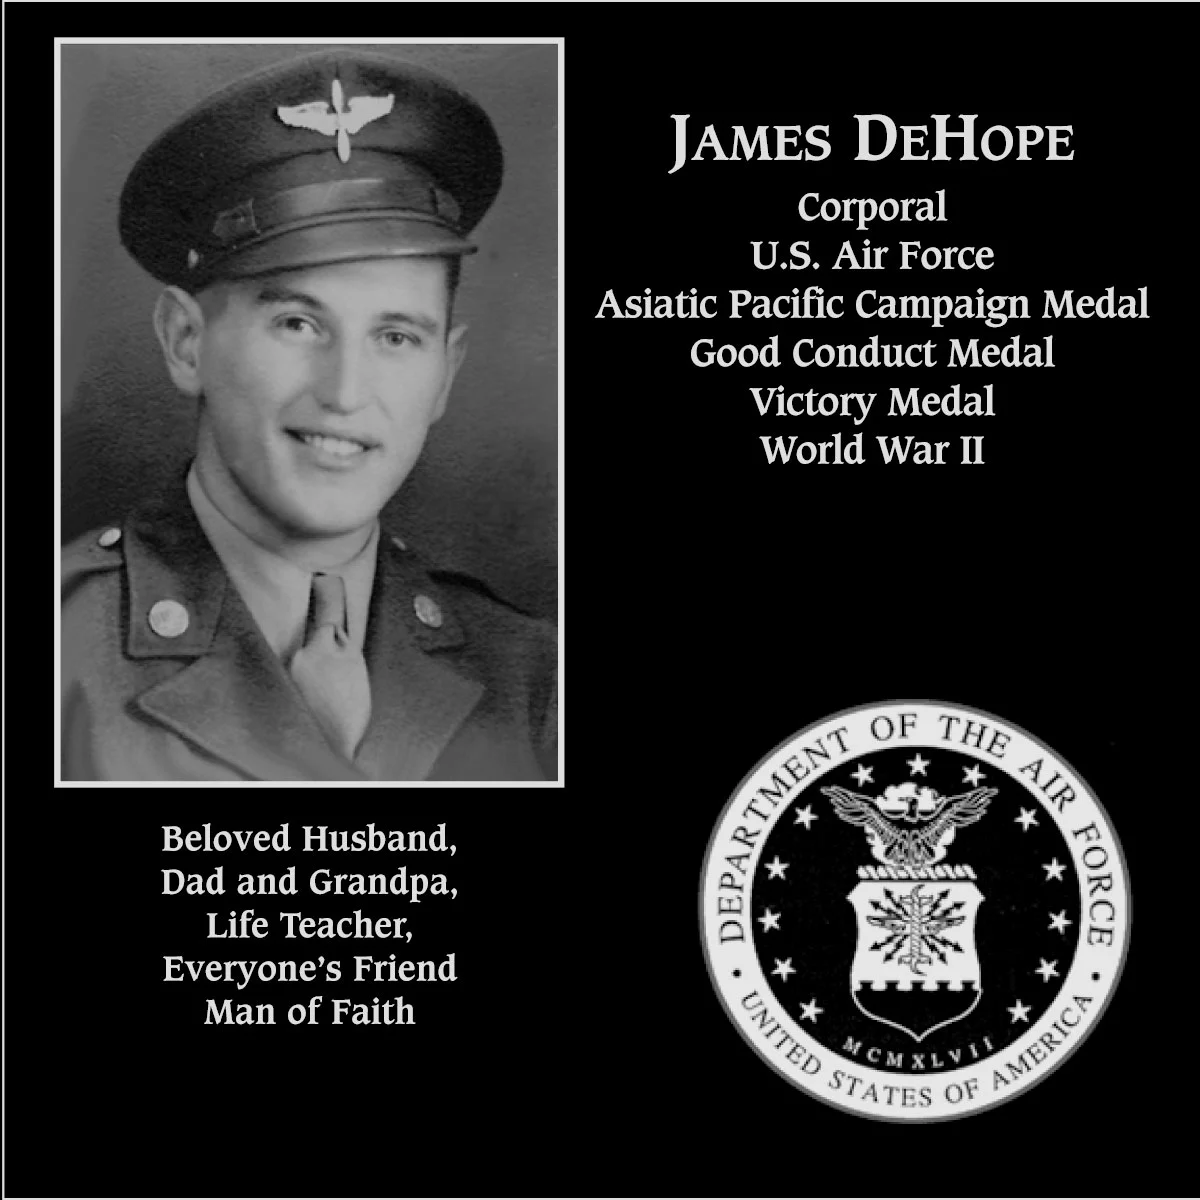 James DeHope